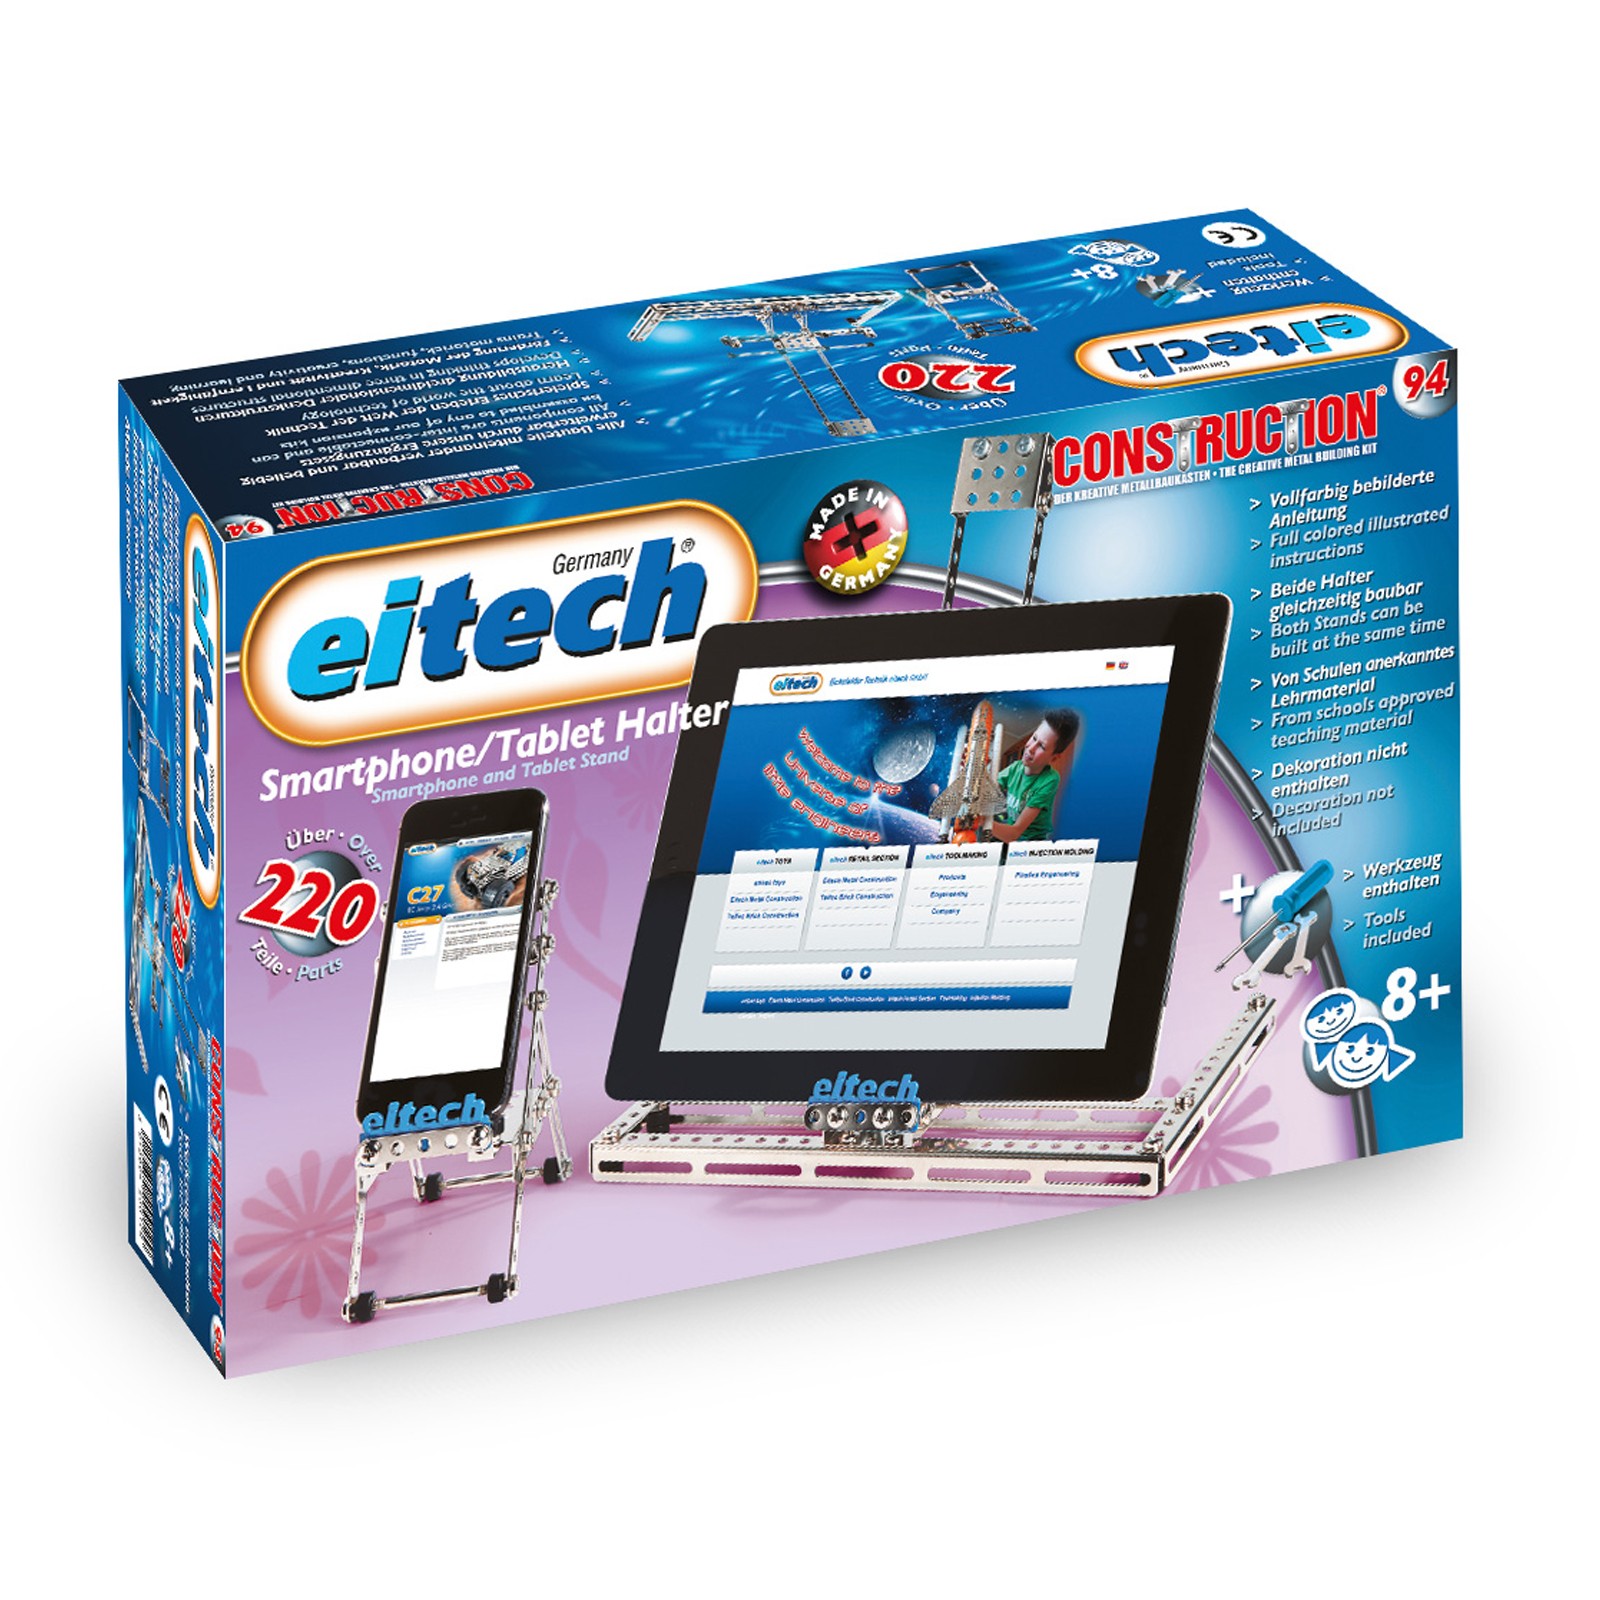 EITECH Metallbaukasten Smartphone/ Tablet Halter